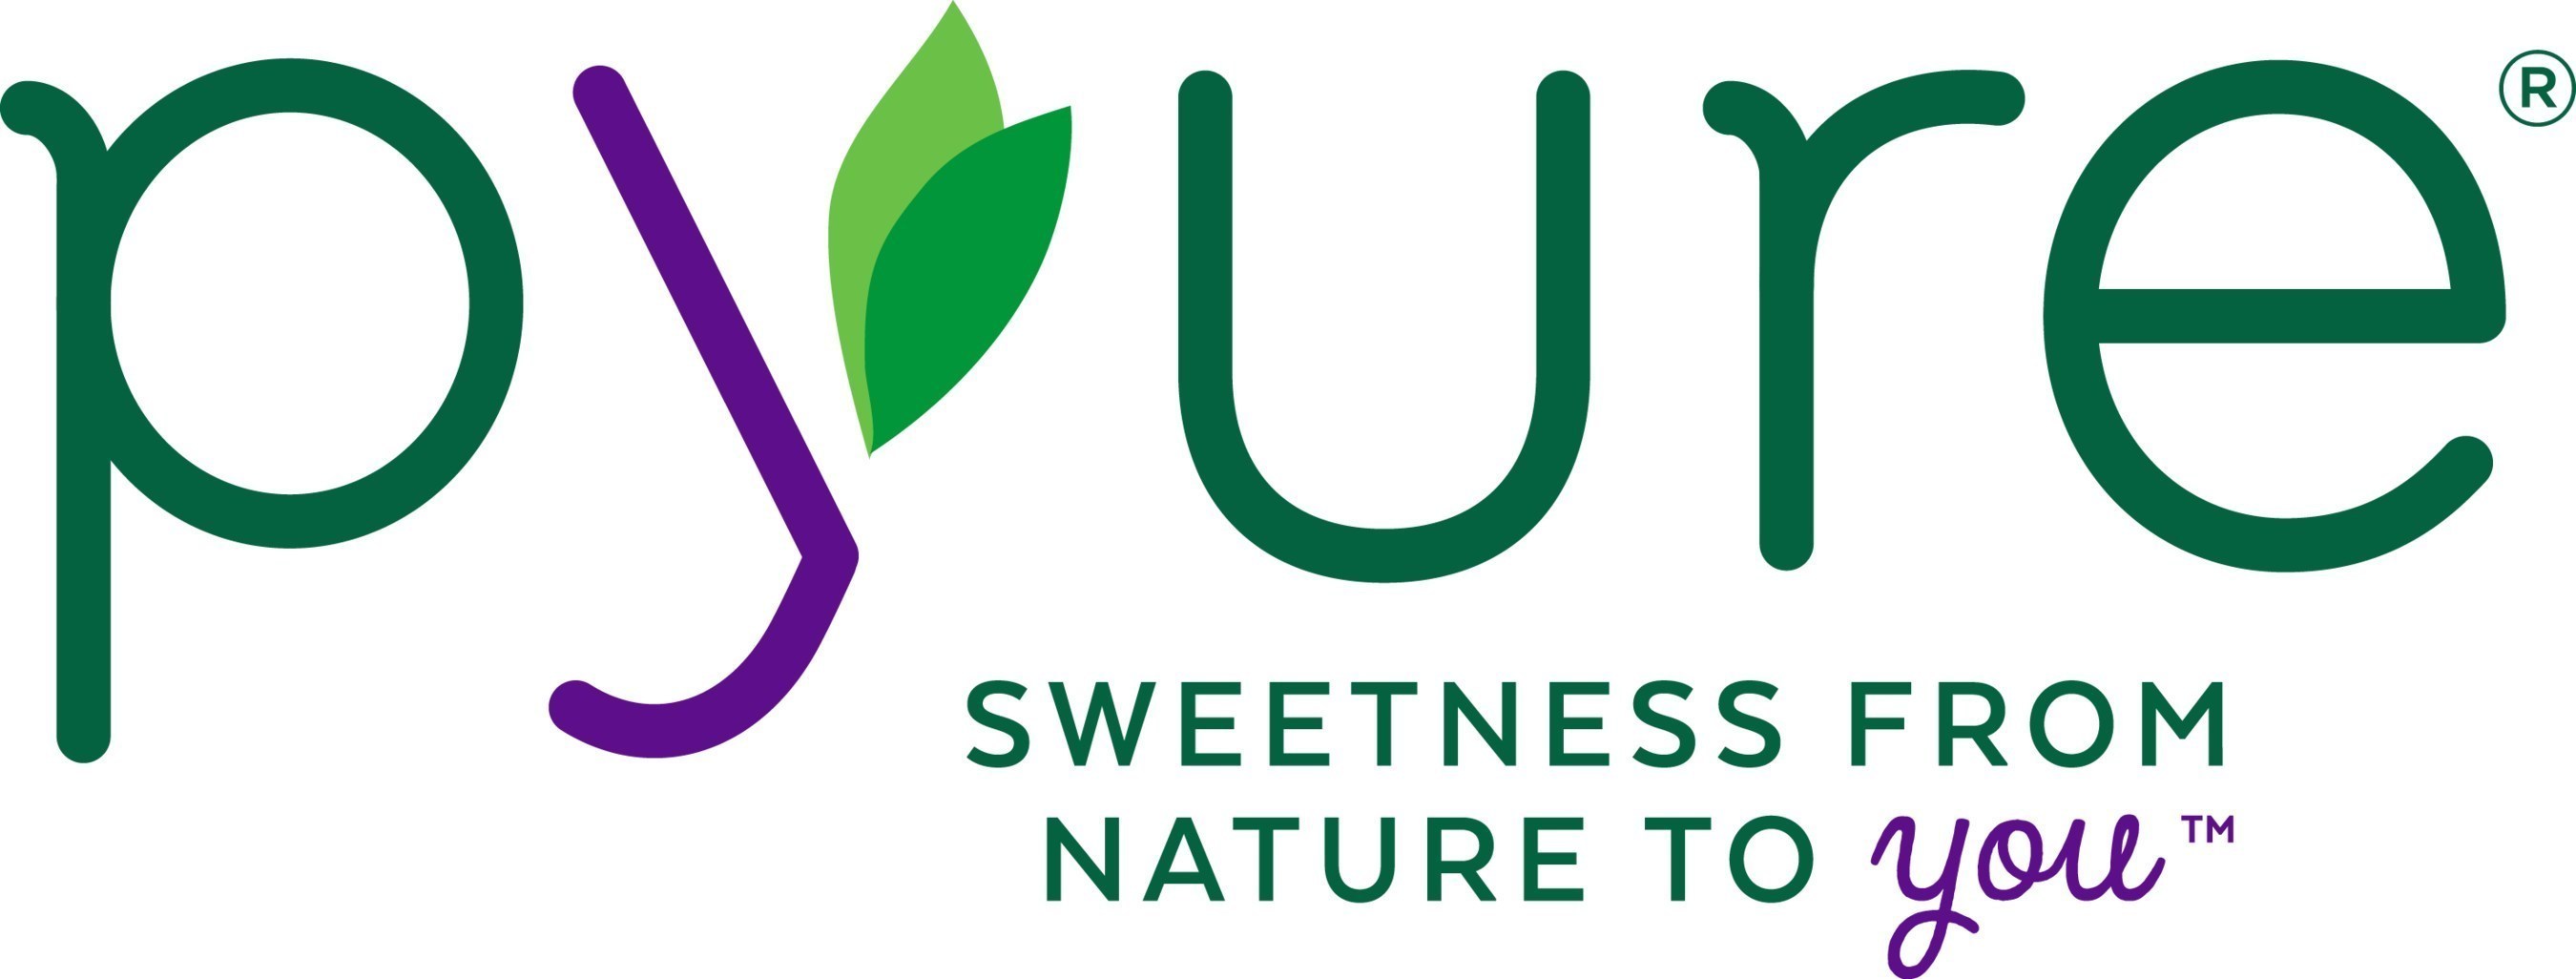 Pyure Organic Stevia Logo (PRNewsFoto/Pyure Brands, LLC)